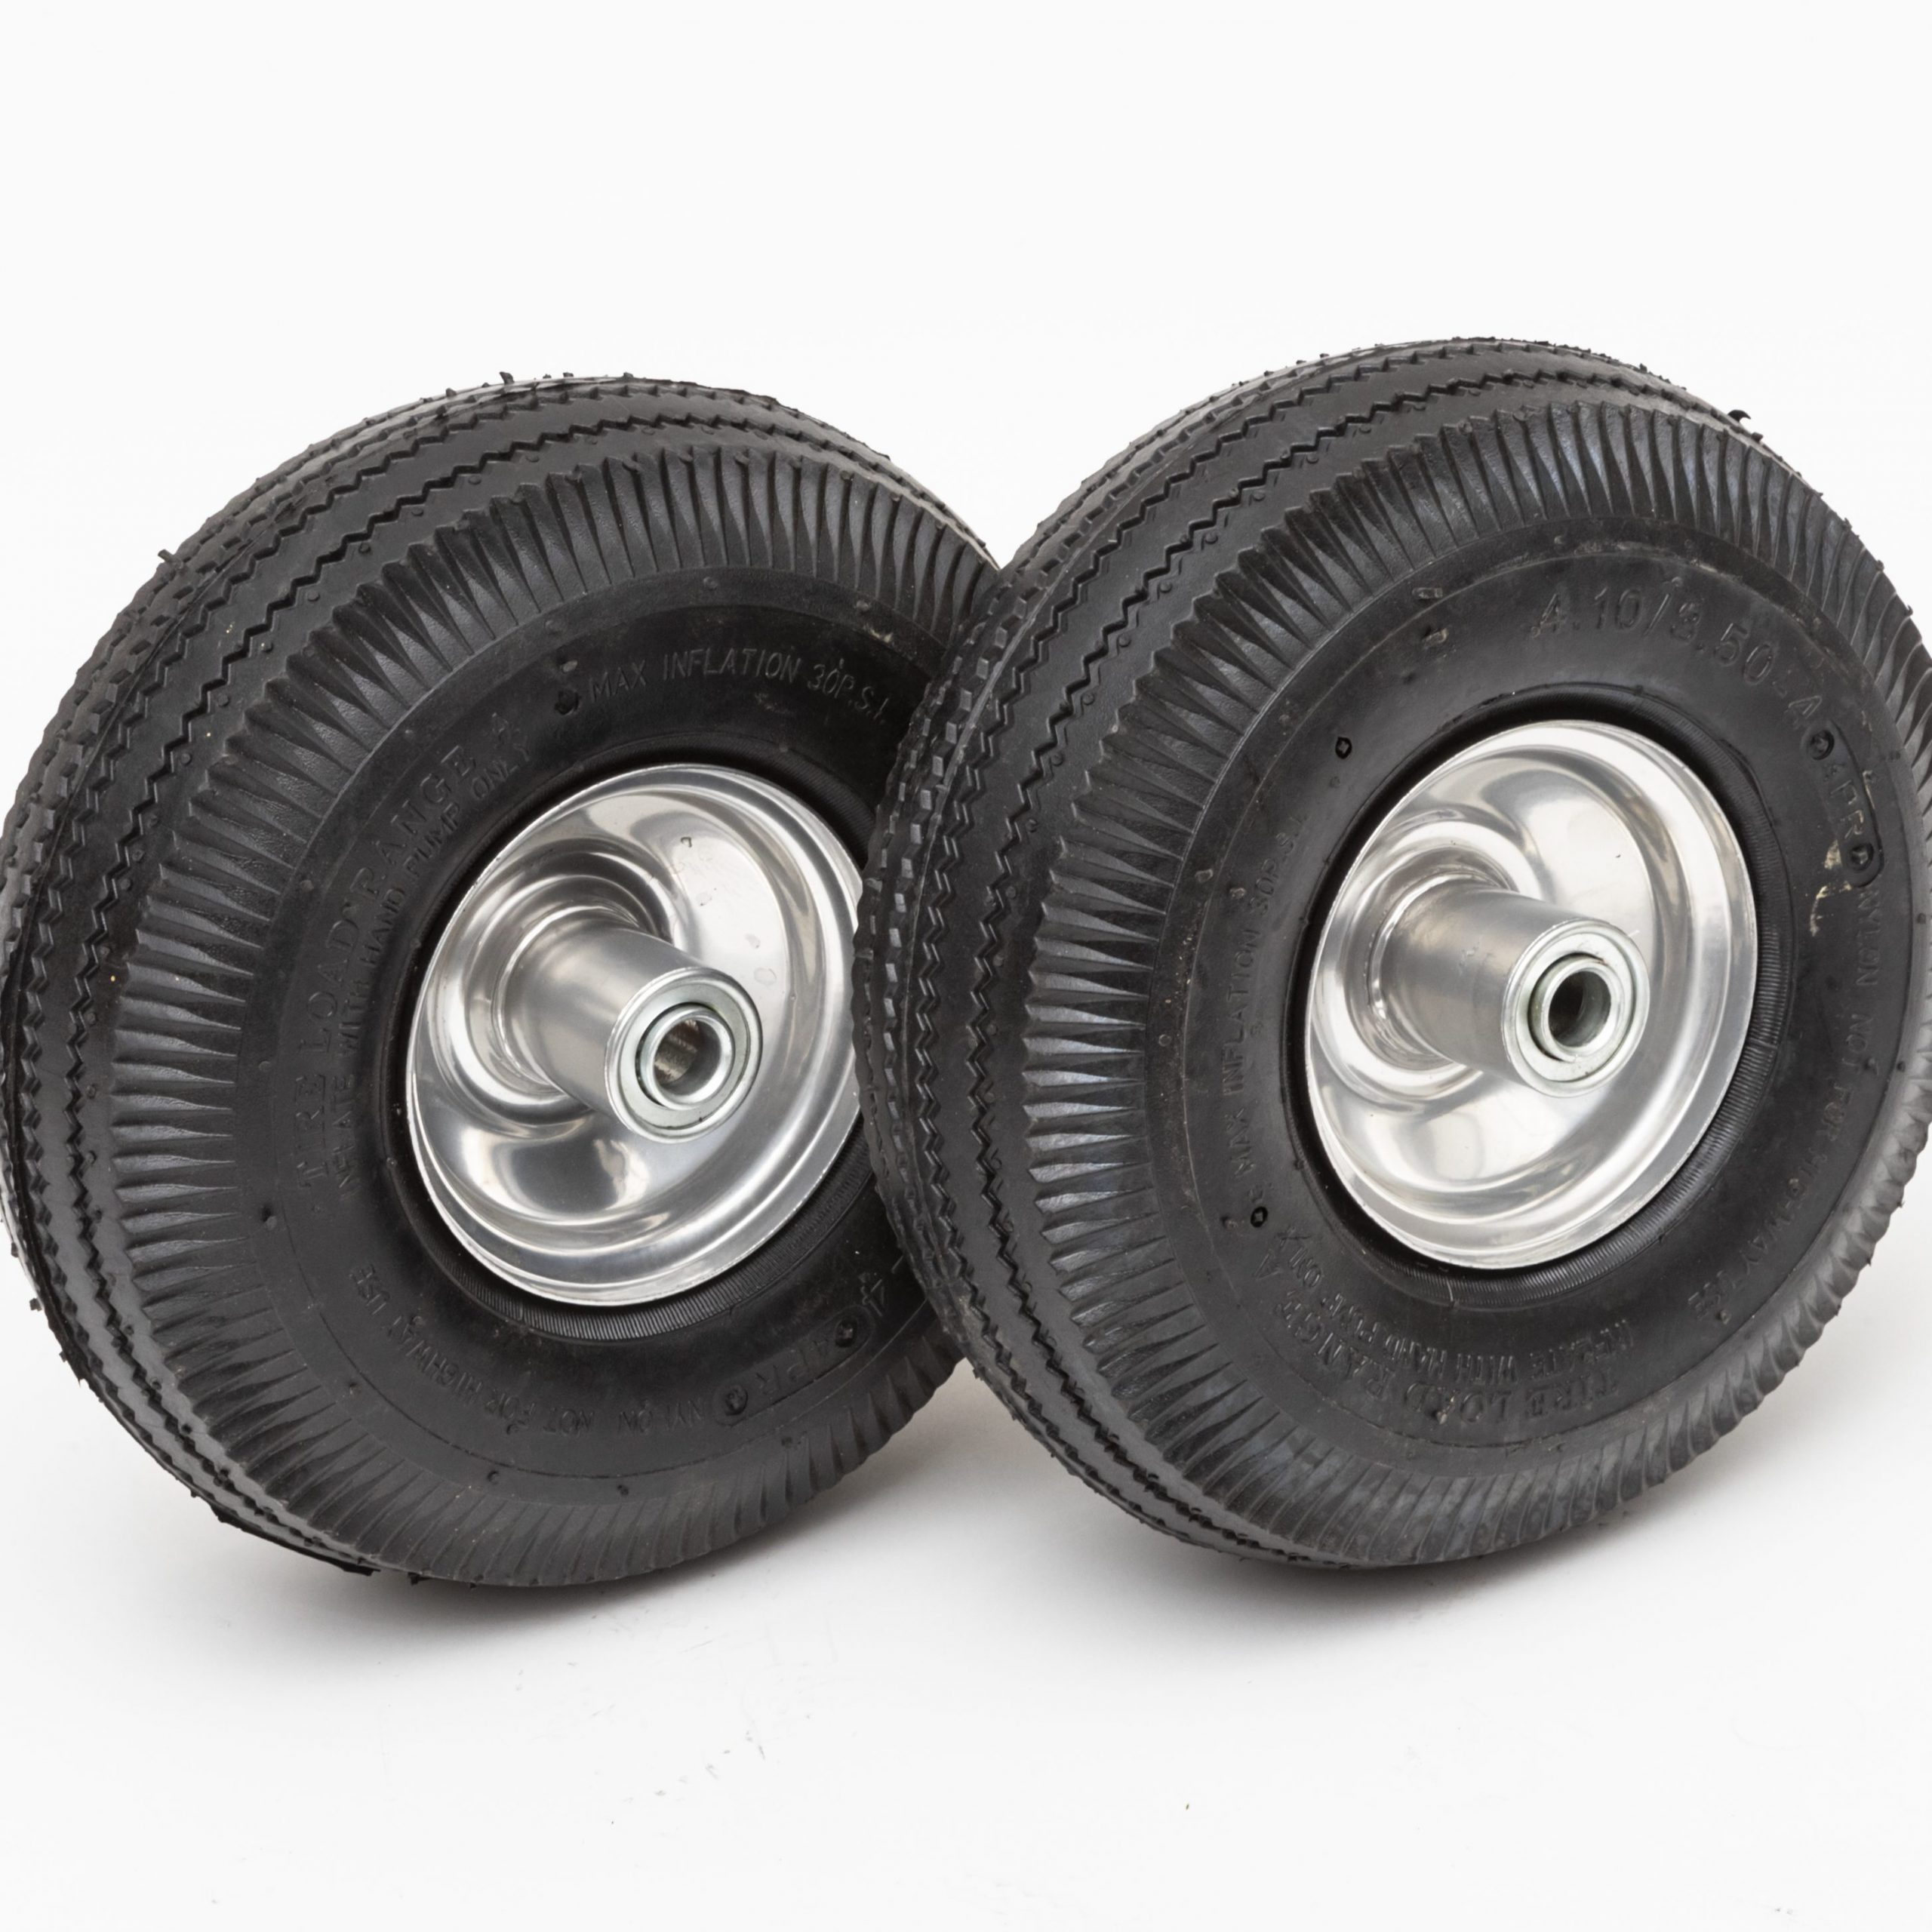 2x Air Wheels Tyres Bag Cart Wheel n2 Luftrad Sackkarrenrad Wheelbarrow k1 